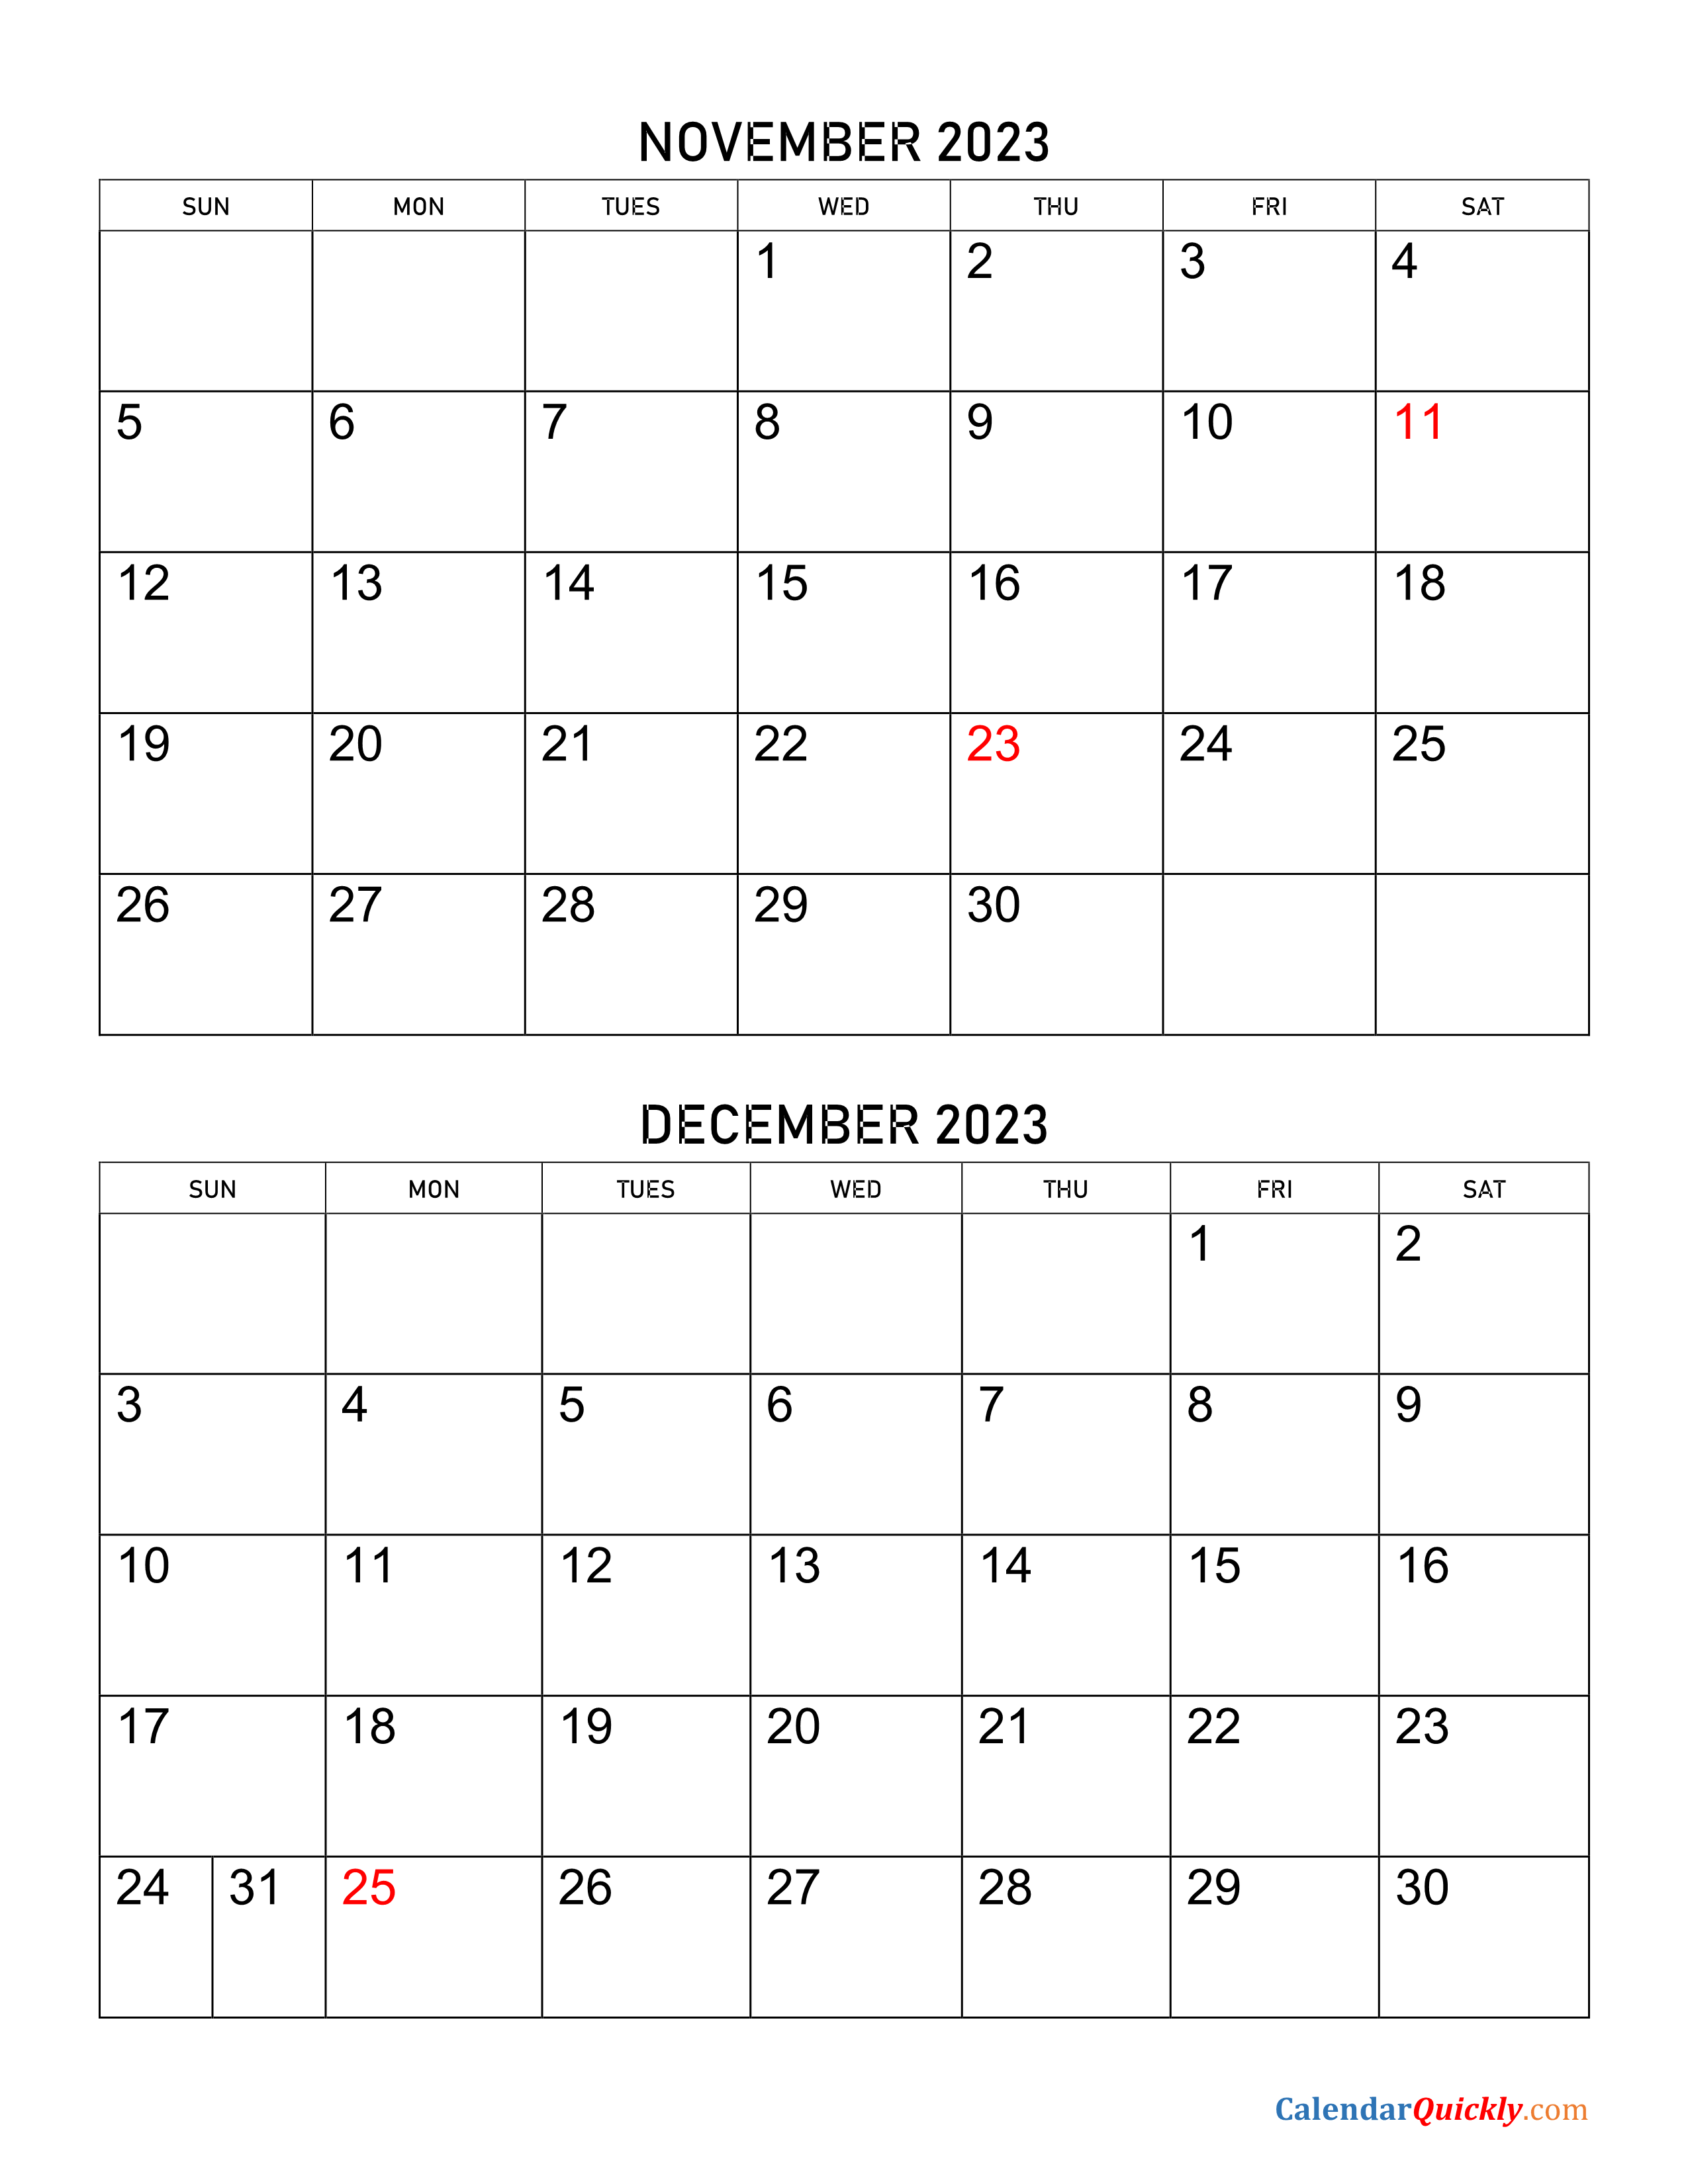 november-and-december-2023-calendar-calendar-quickly